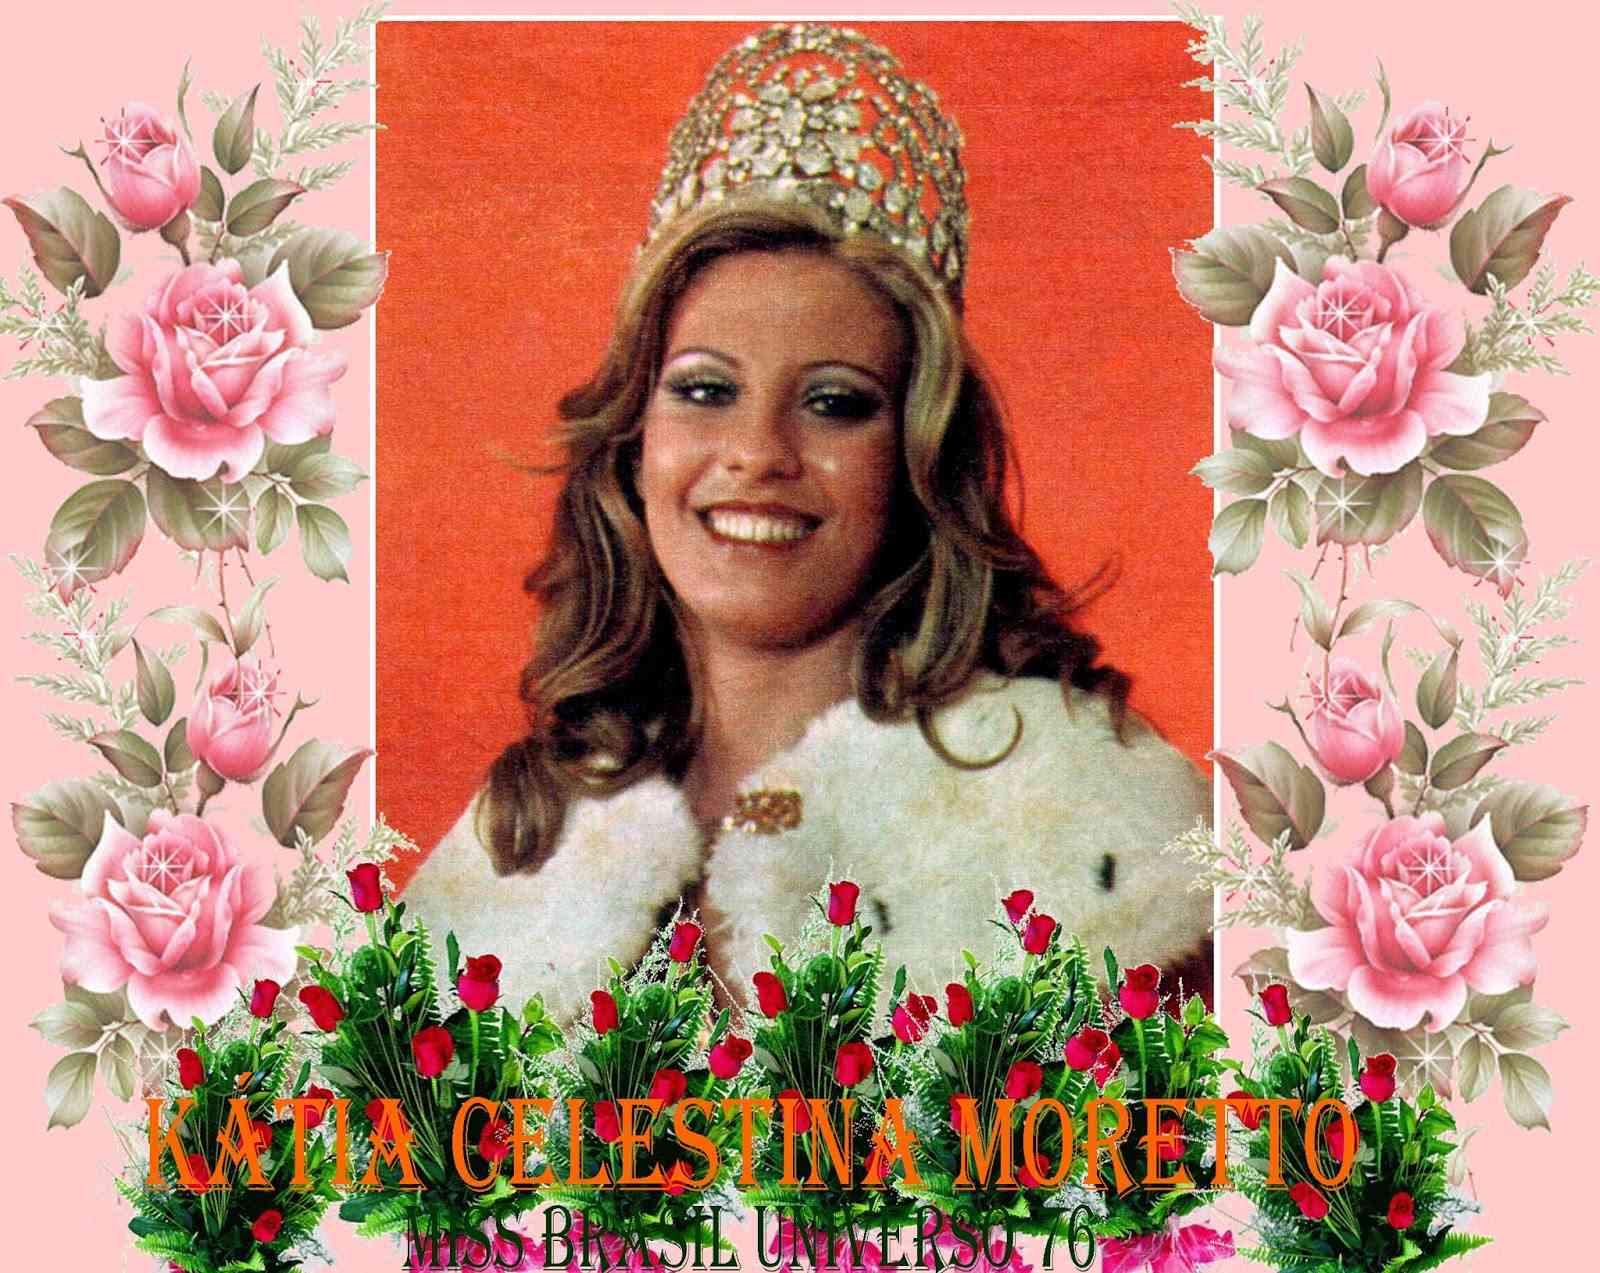 katia celestina moretto, miss brasil 1976 (1957 - 04/29/2013). † Morted10